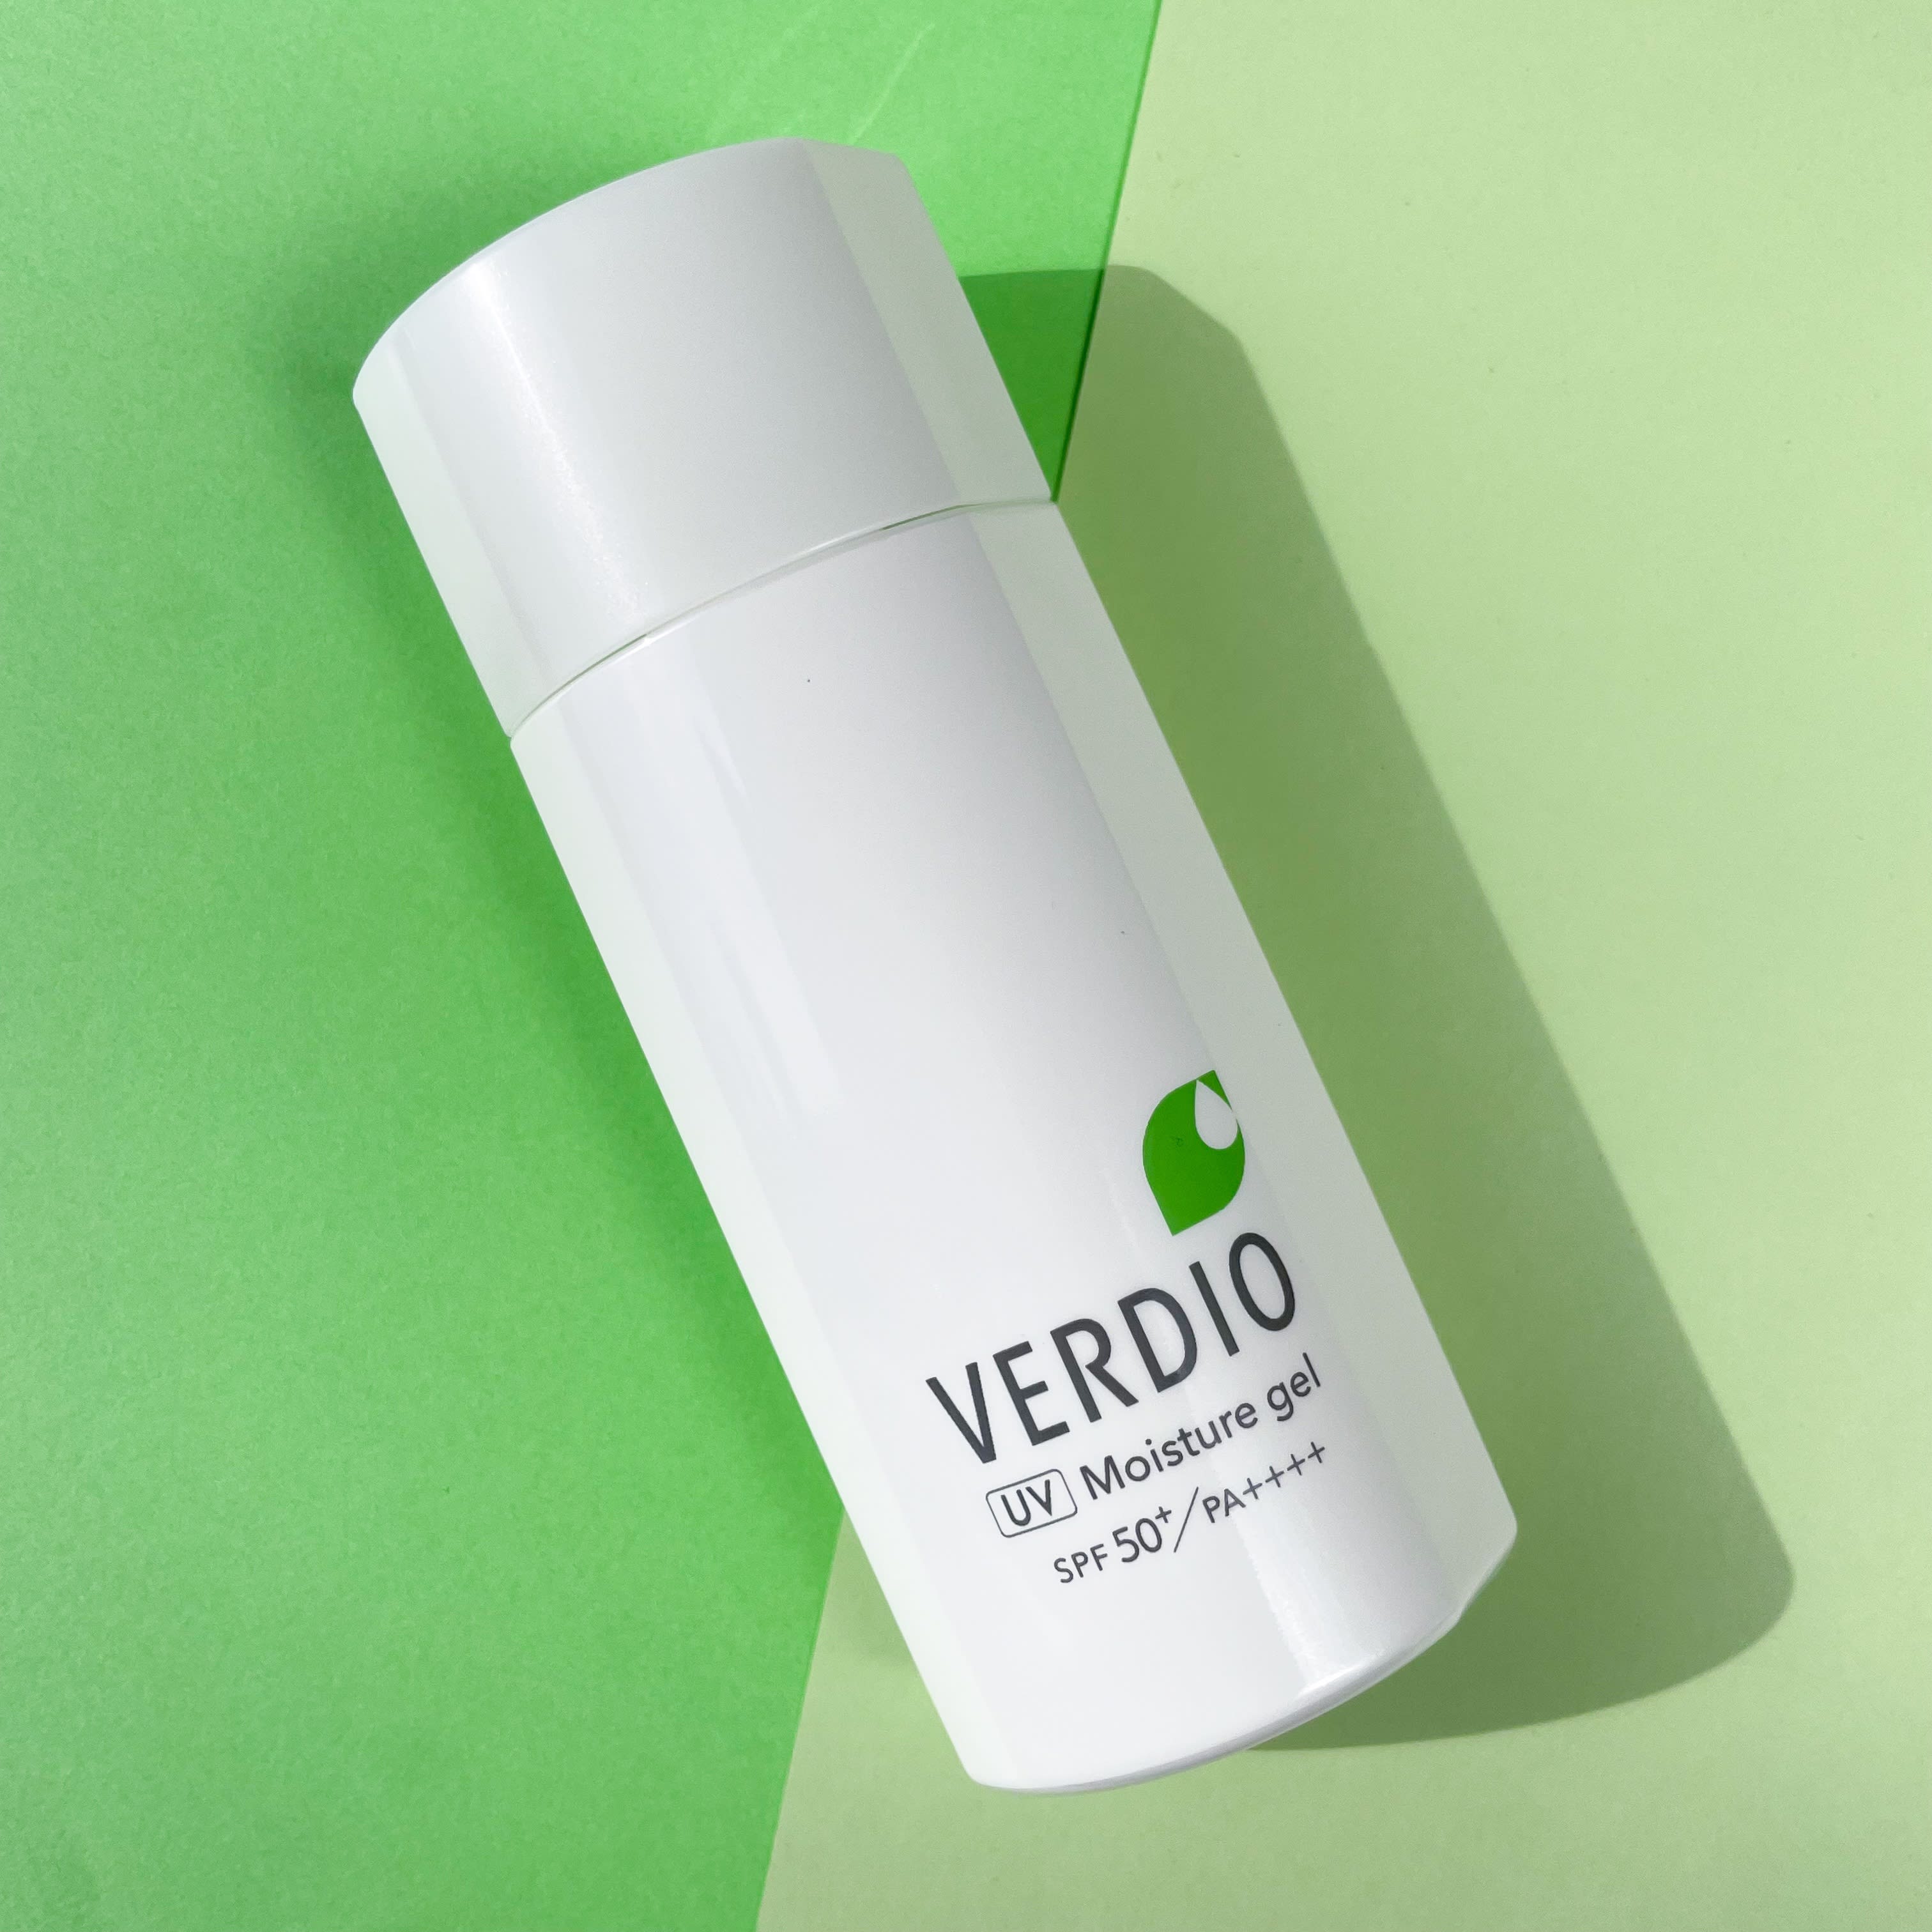 Omi Verdio UV Moisture Gel Soothing Cica Sunscreen SPF50+ PA++++ 80g